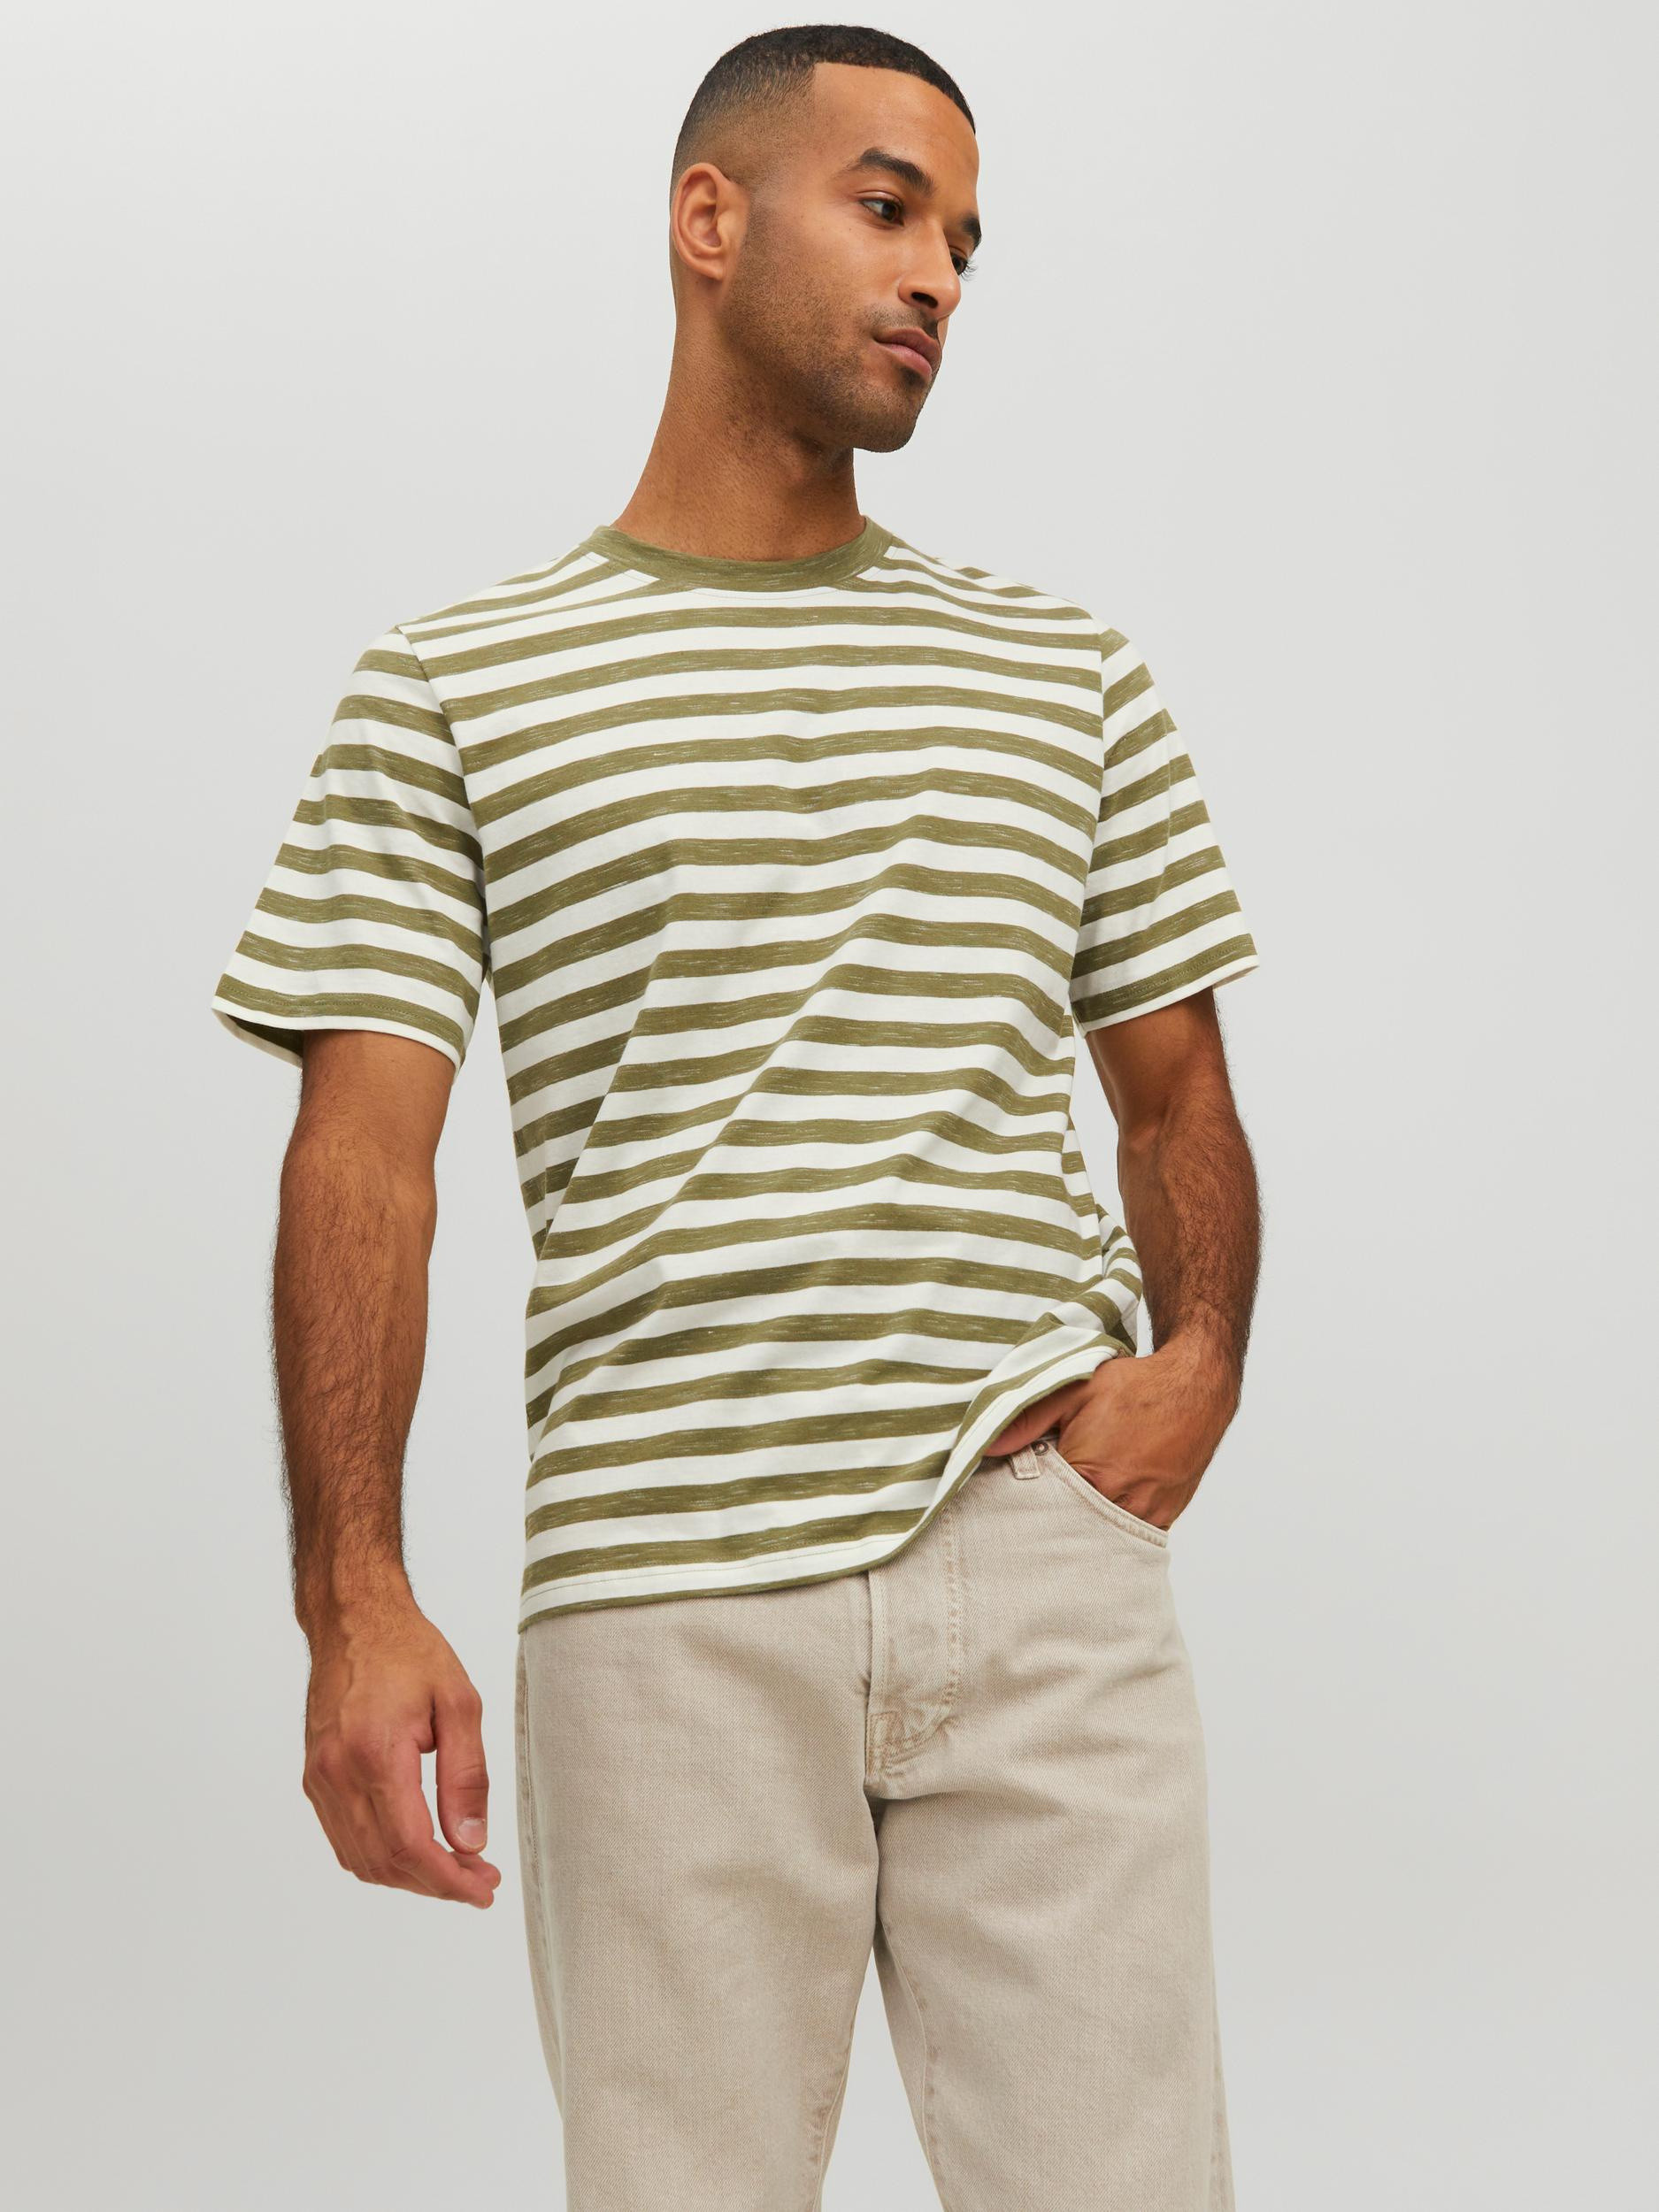 Jack & Jones - T-shirt a righe, Verde chiaro, large image number 1